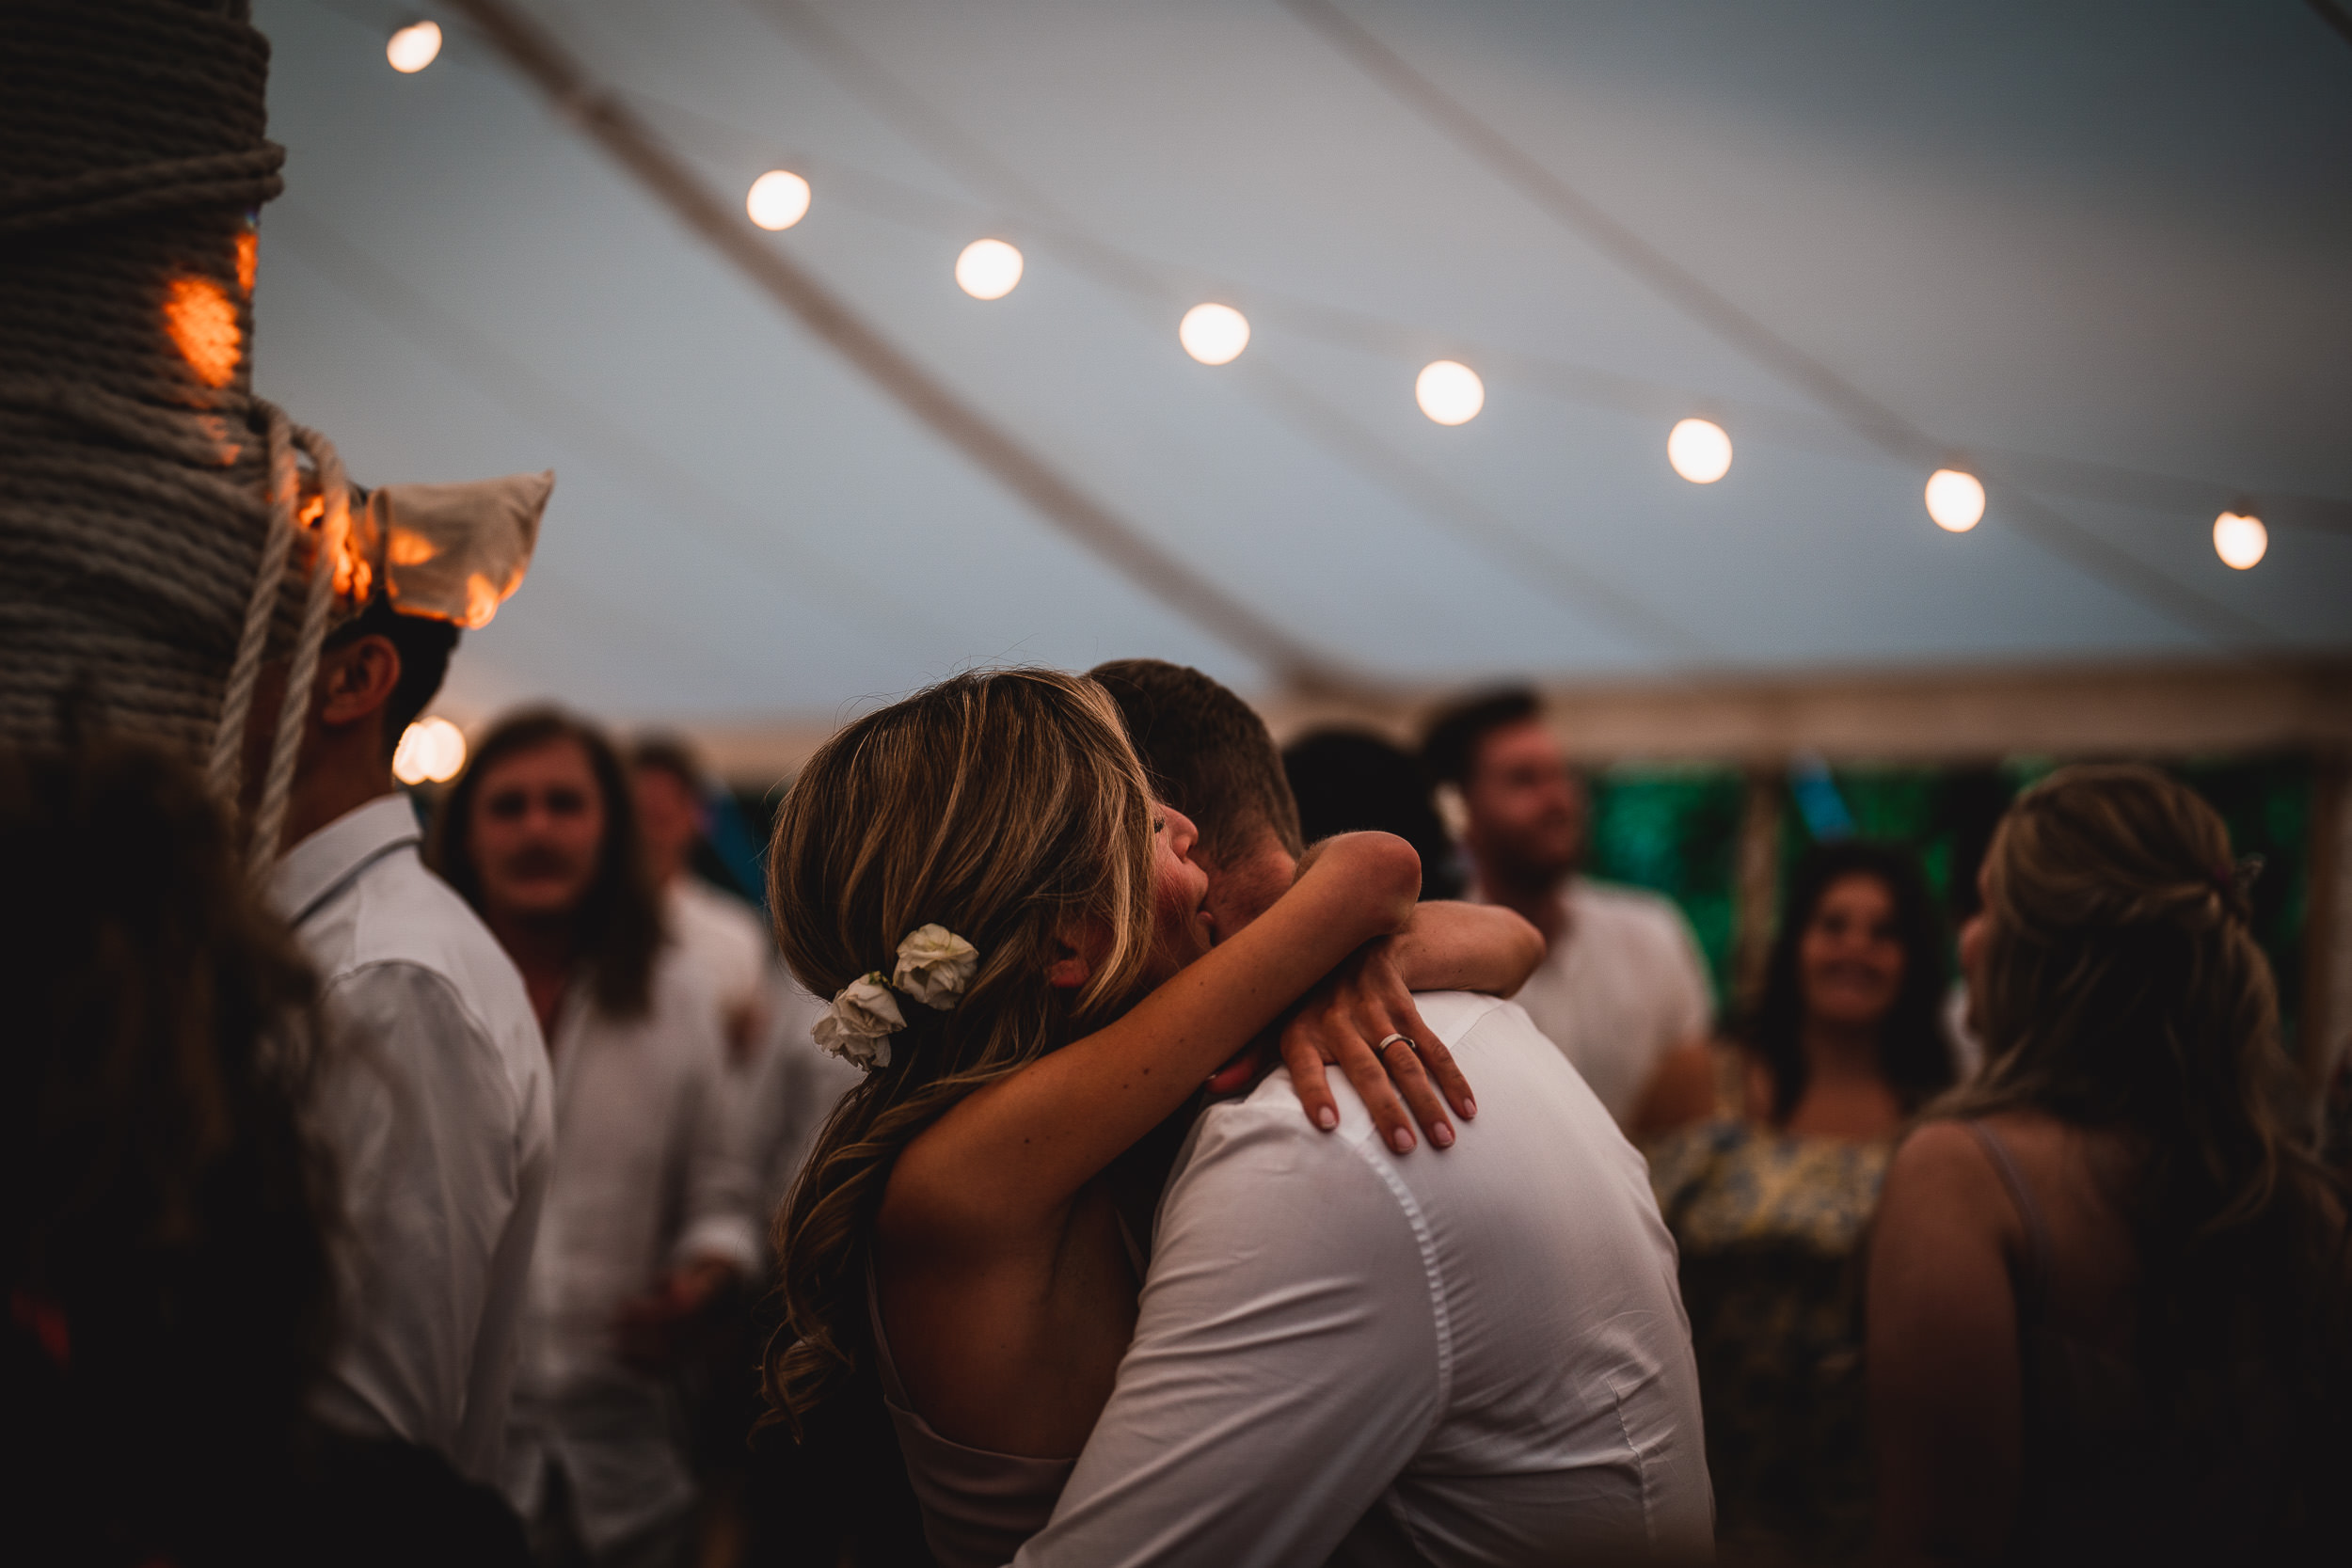 A wedding photographer capturing a bride and groom's heartfelt embrace.